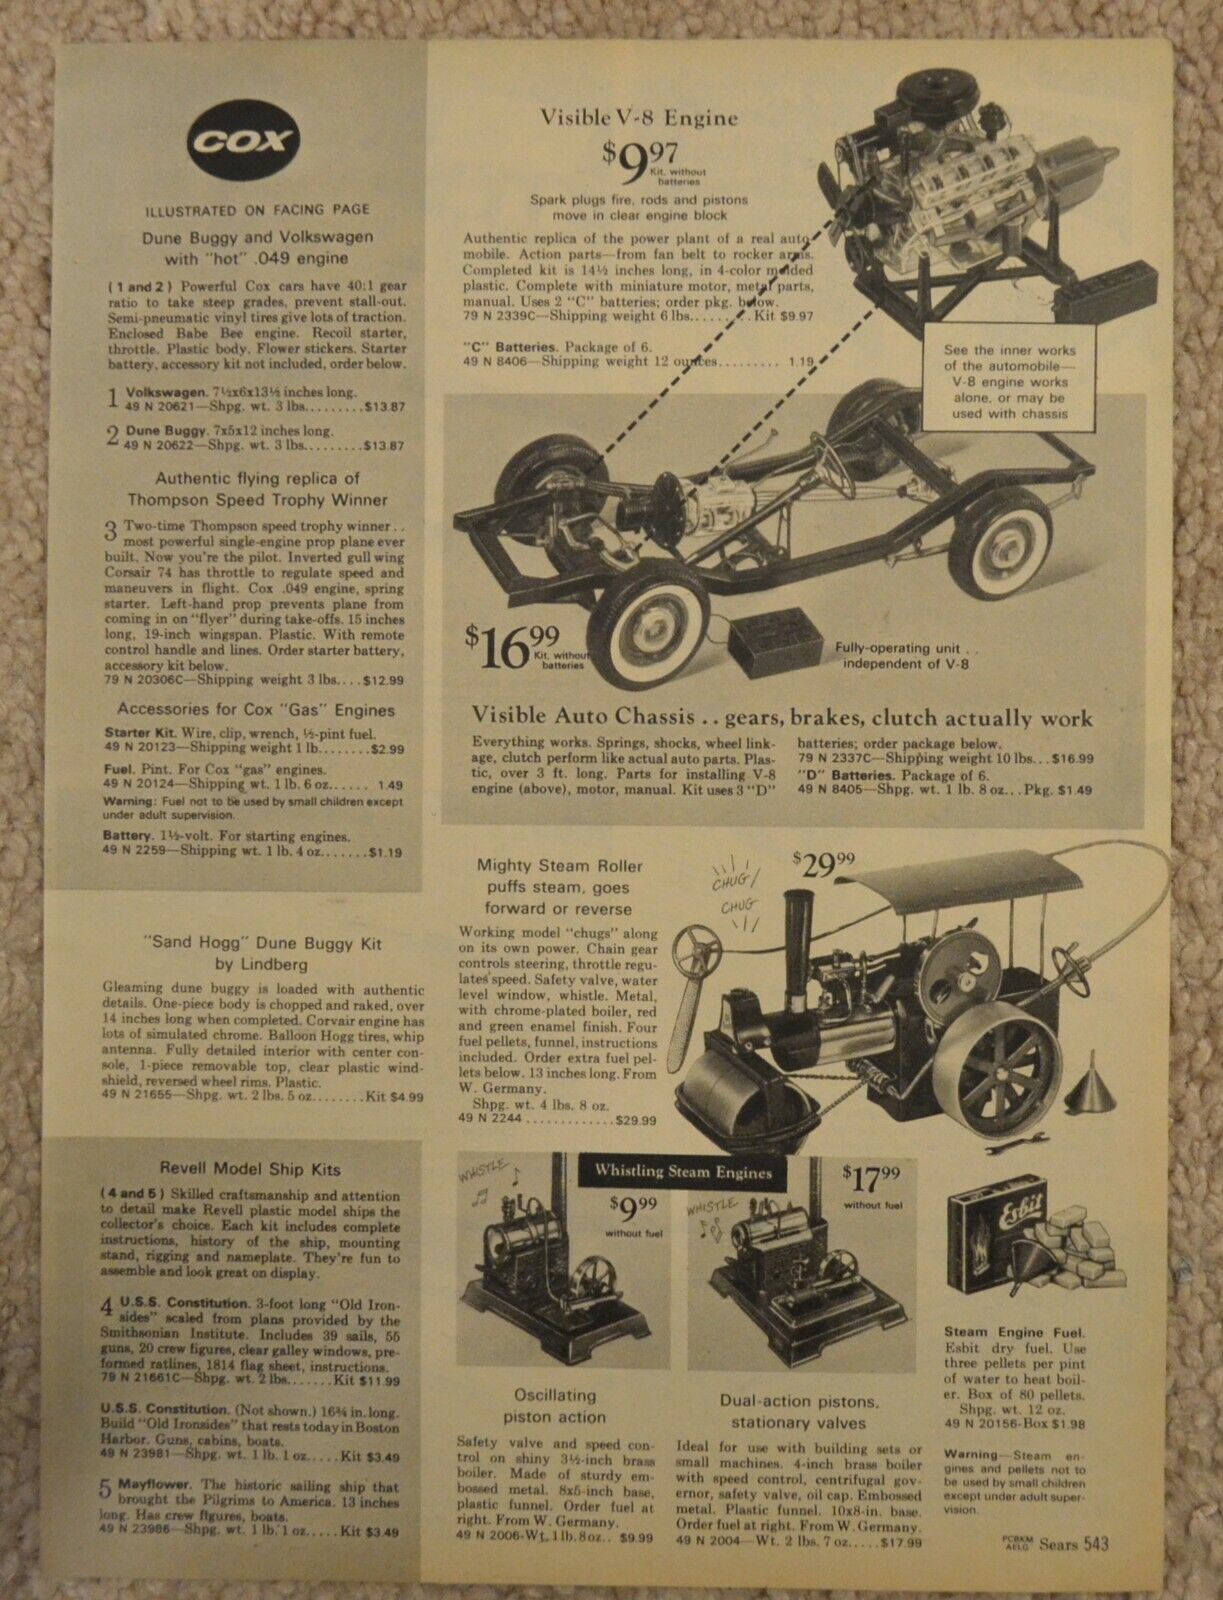 Sears Print Ad Cox Dune Buggy Volkswagen 049 Engine Woodburning Set